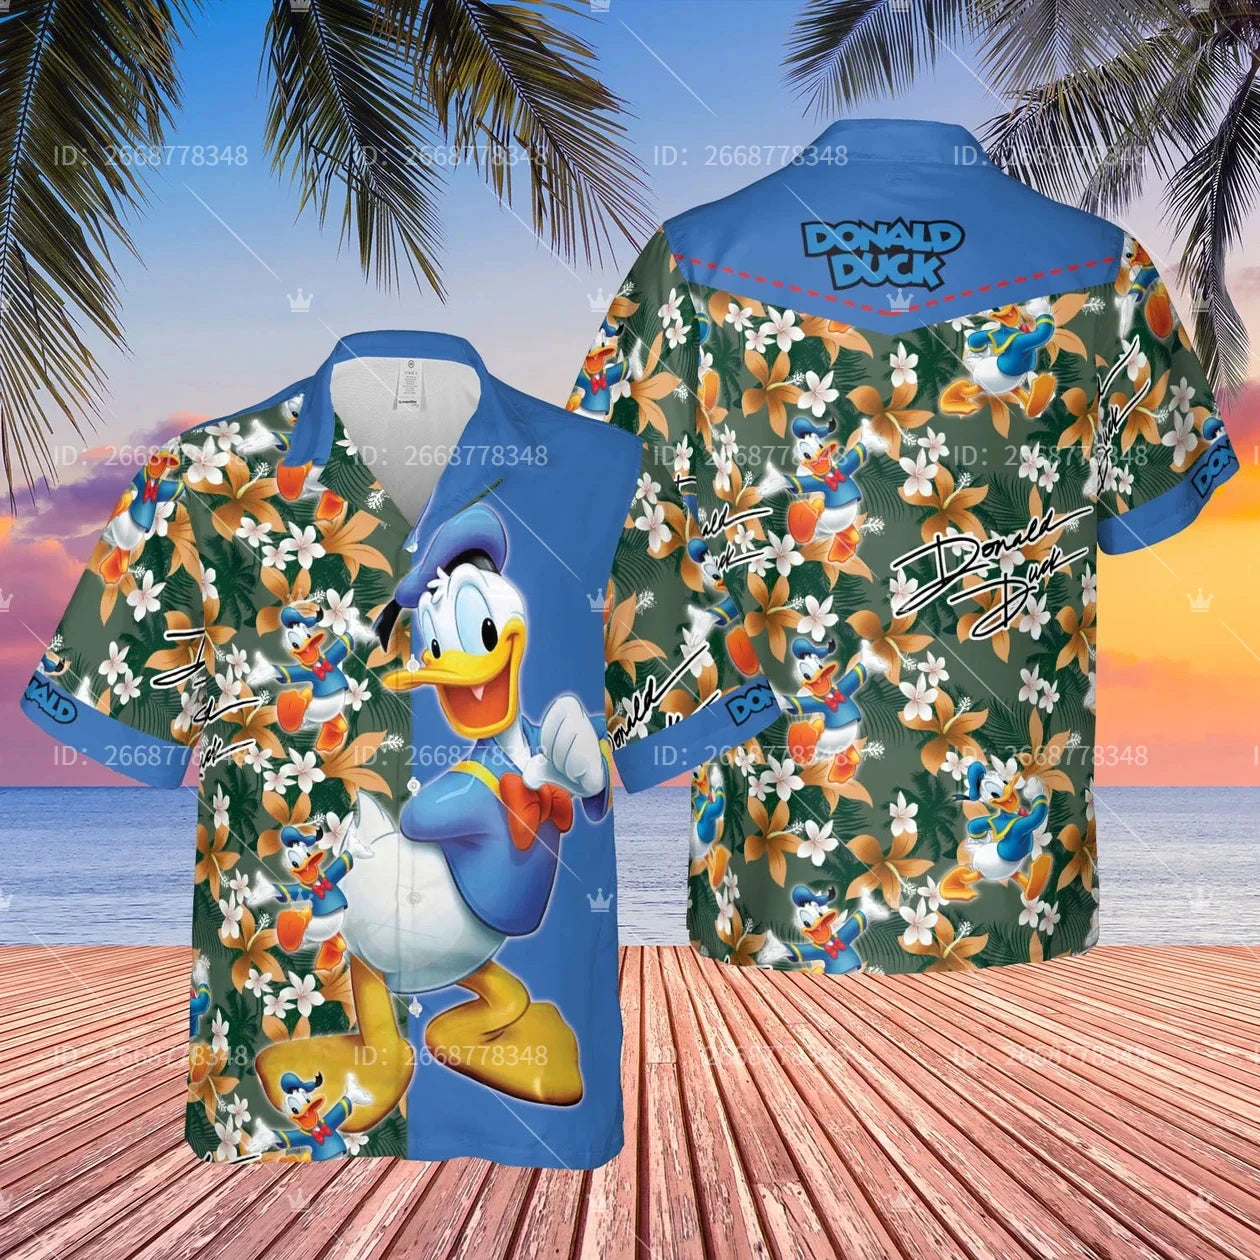 Hawaiian Style Donald Duck Printed Funny Casual Shirt